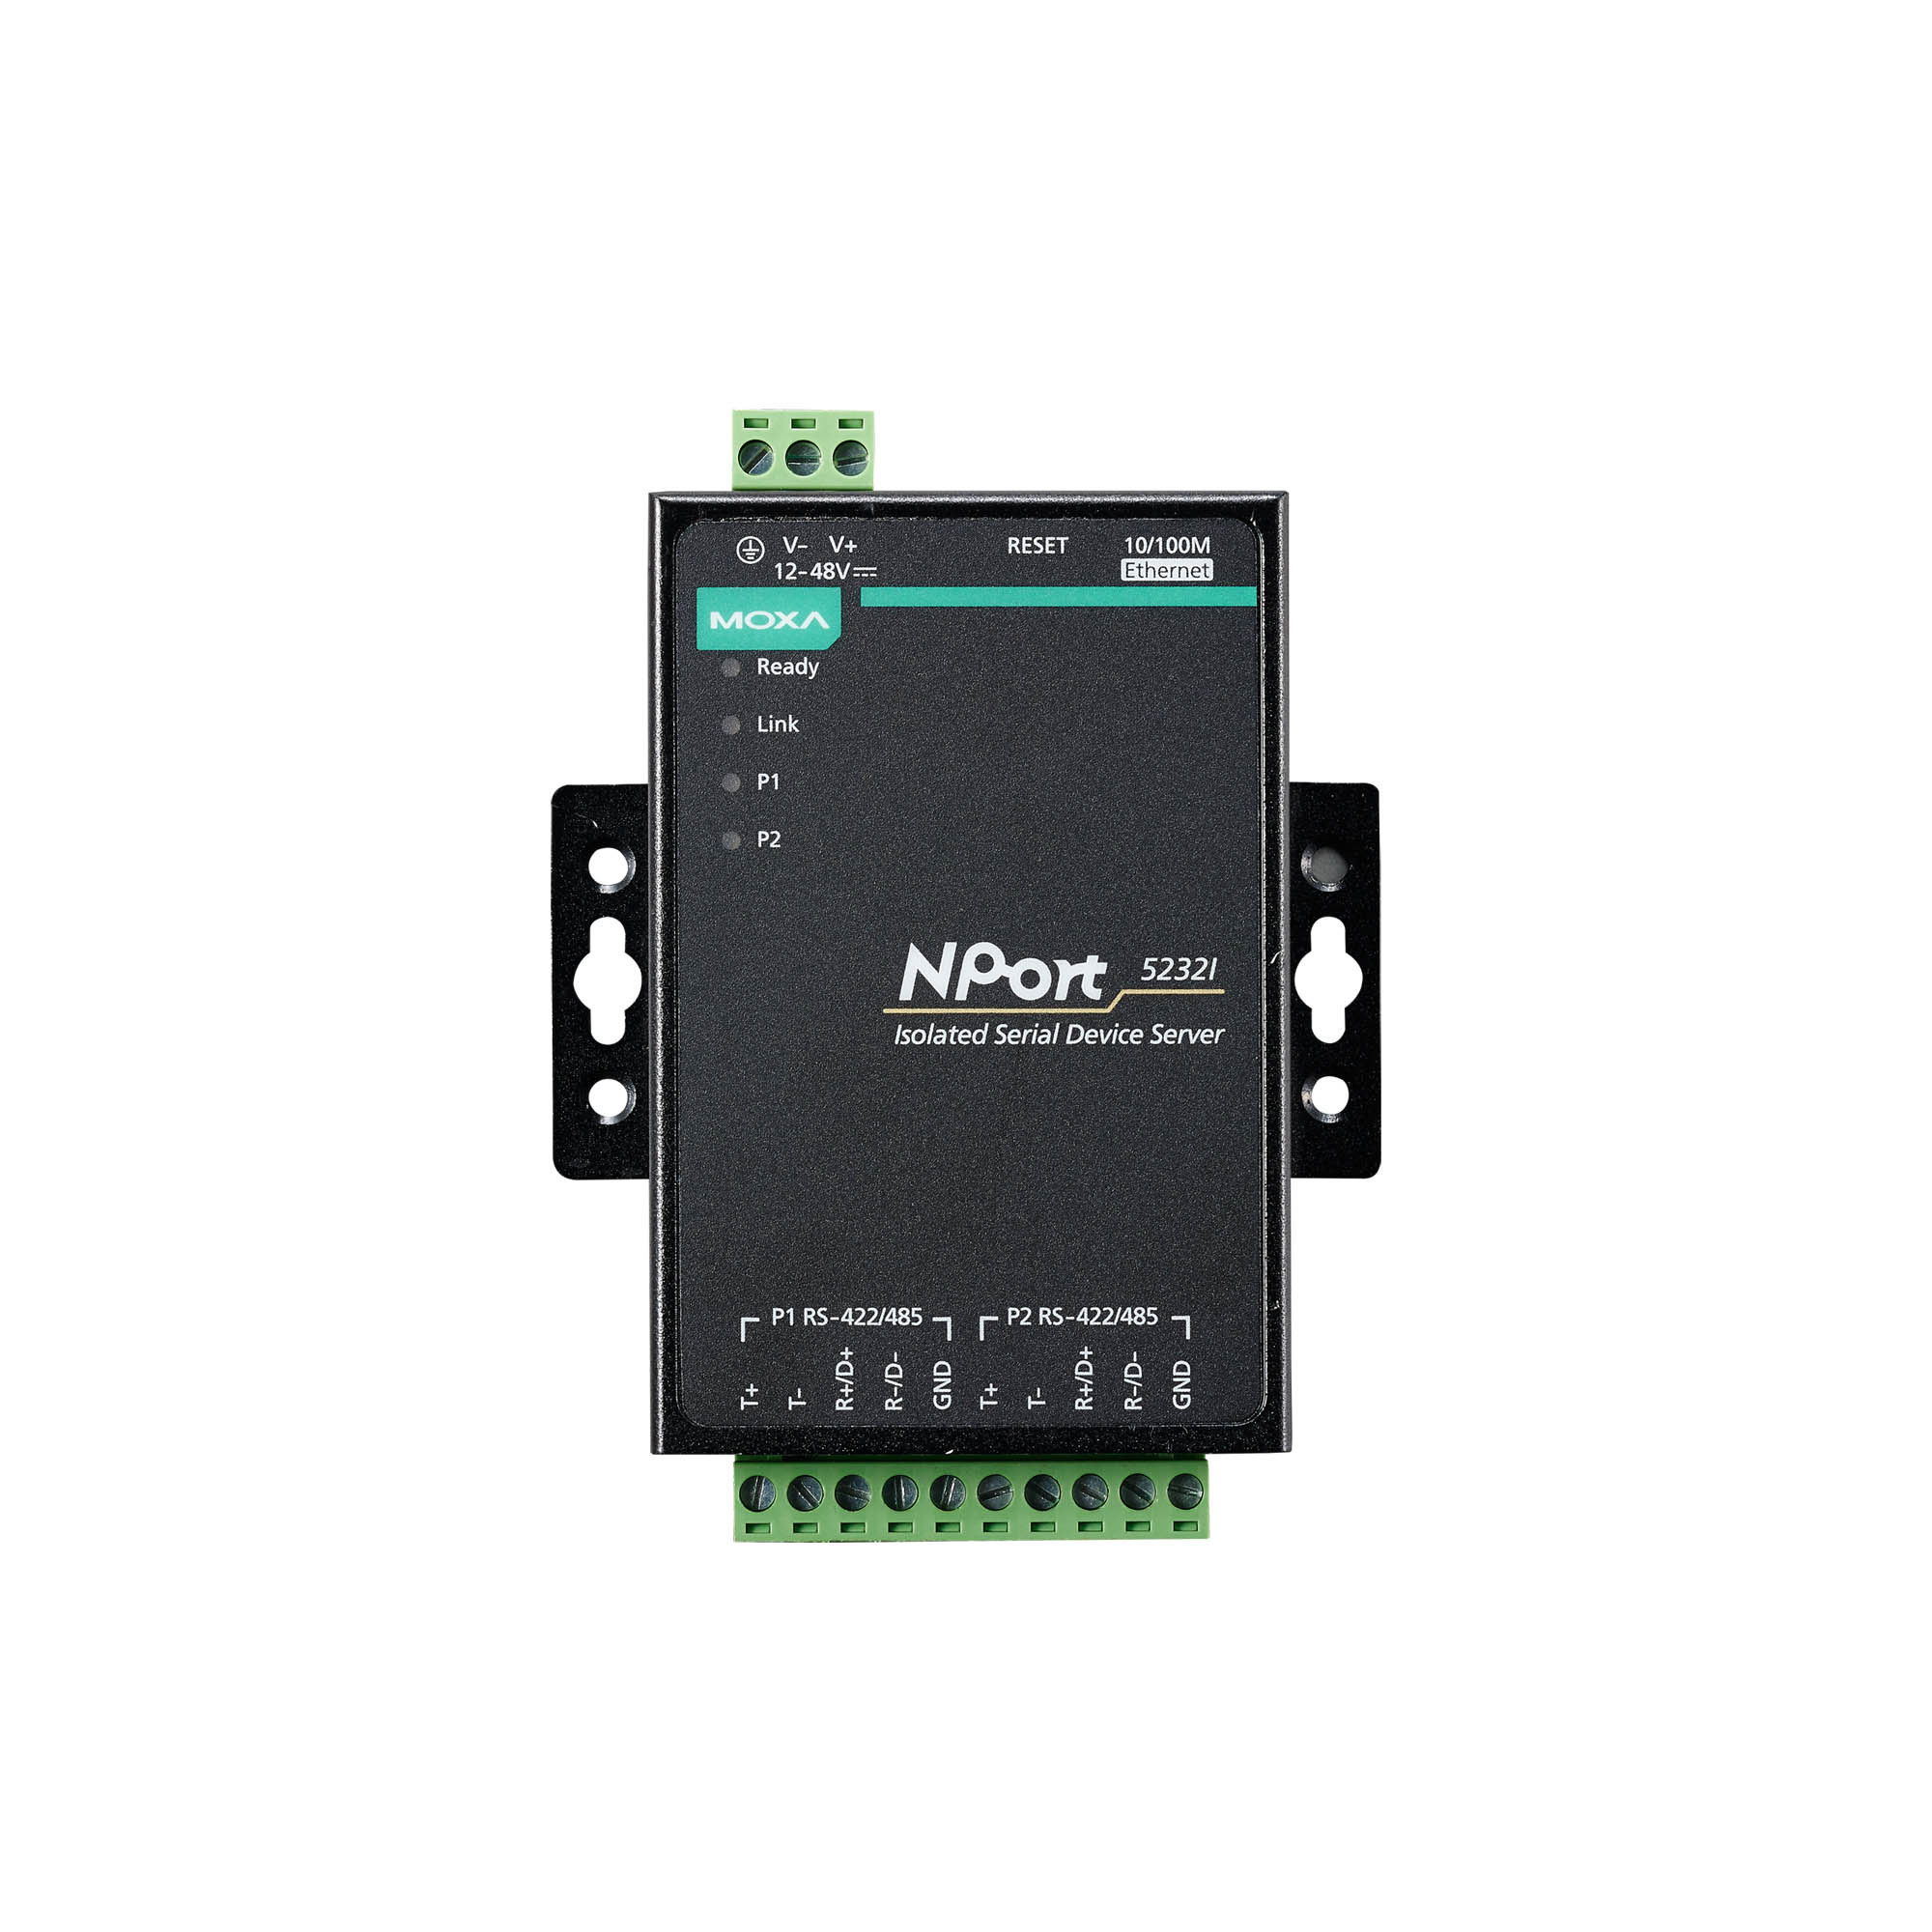 NPort 5200 Series - General Device Servers | MOXA